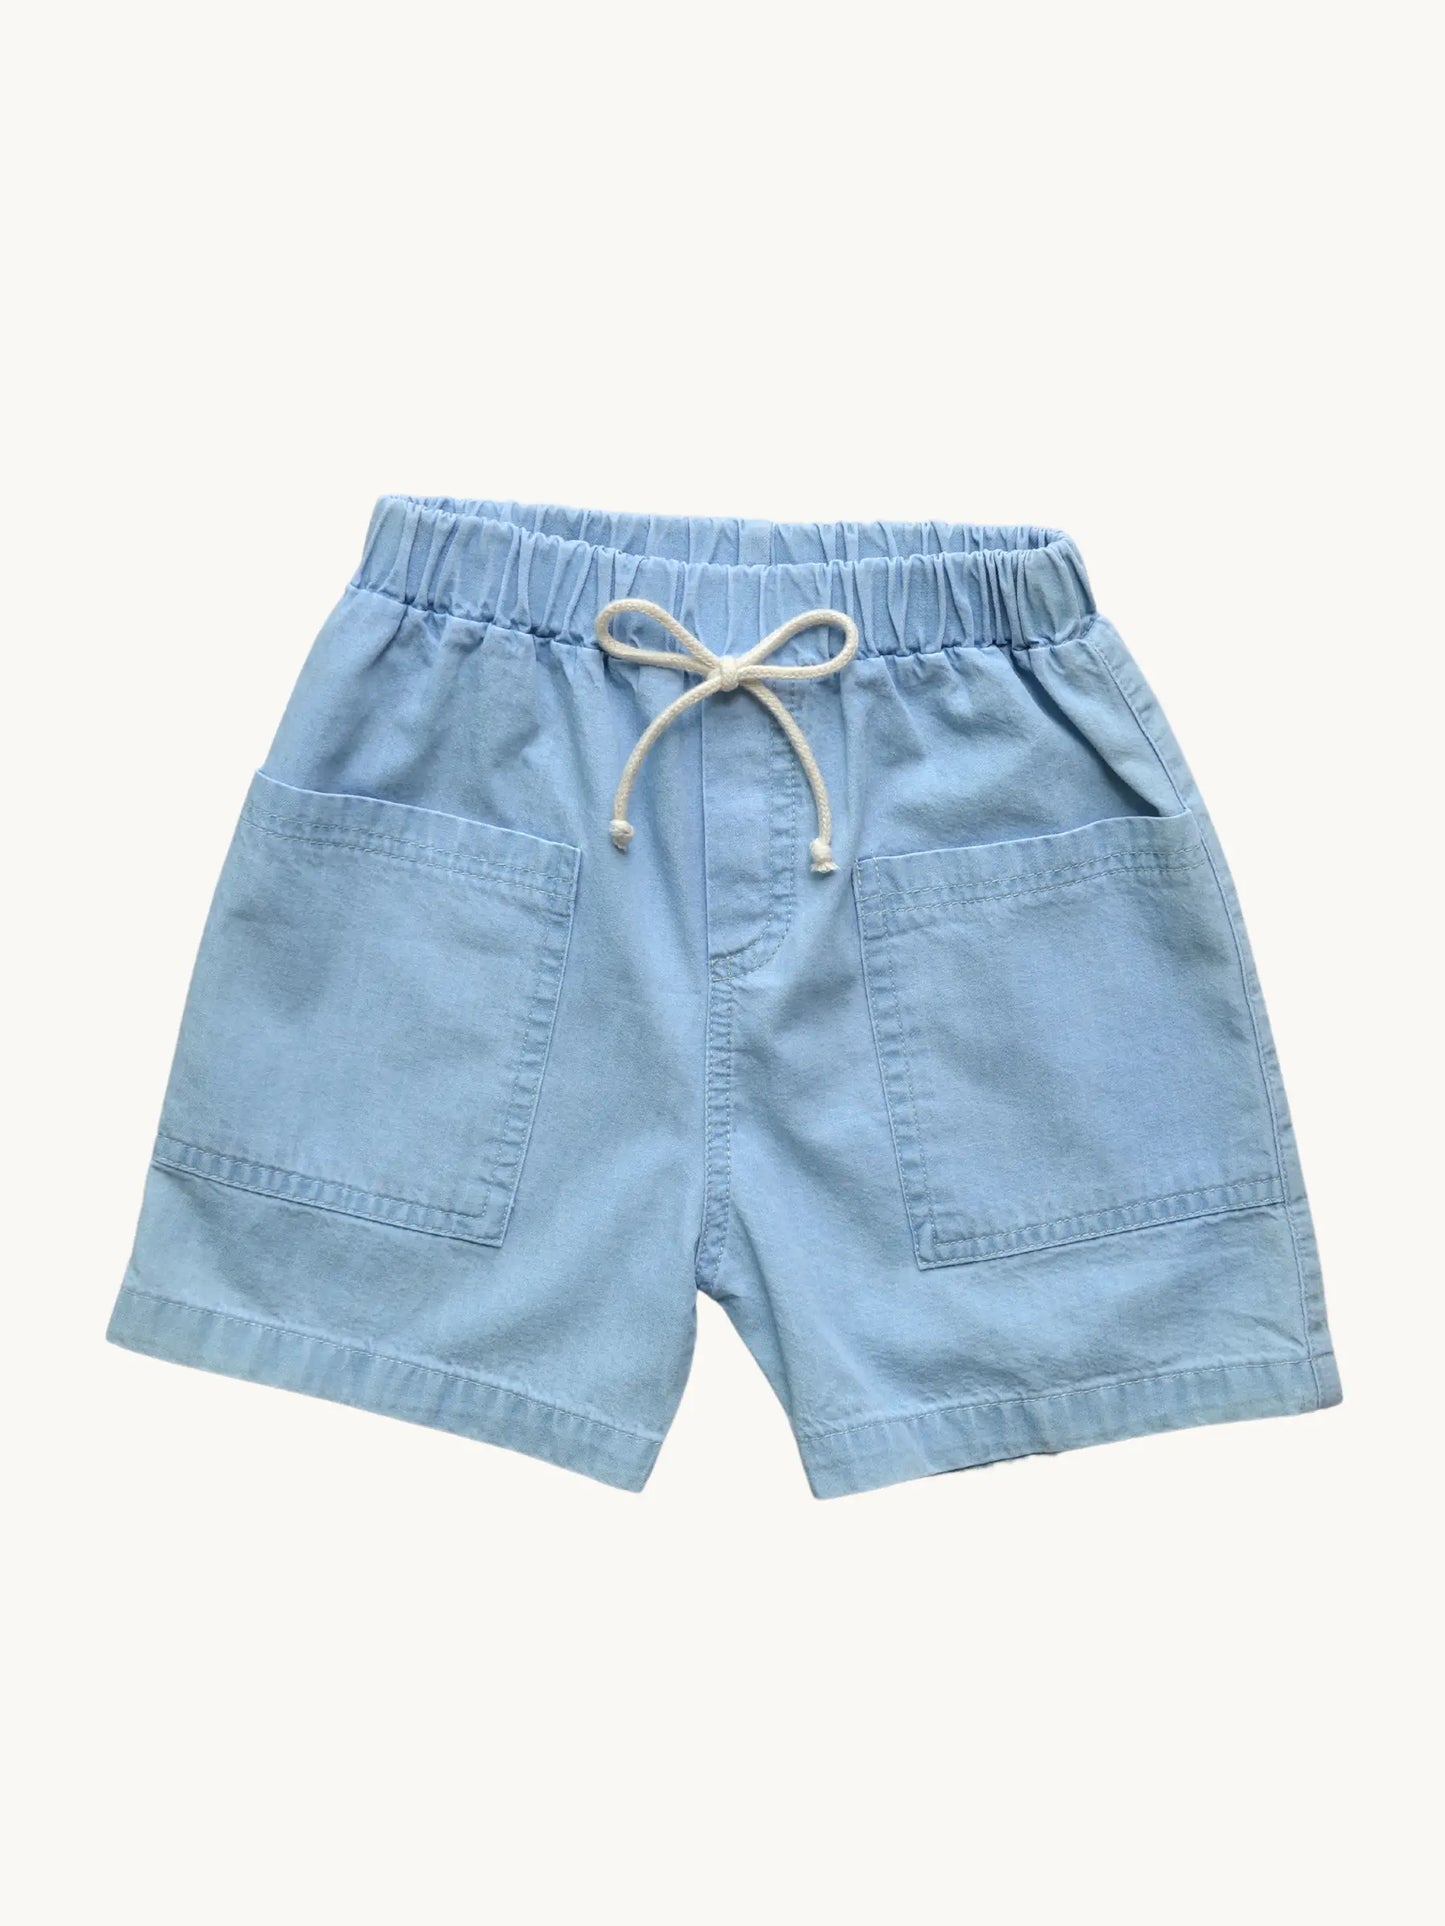 Eli & Nev Mae Baby/Kid's Shorts (100% Cotton) blue shorts